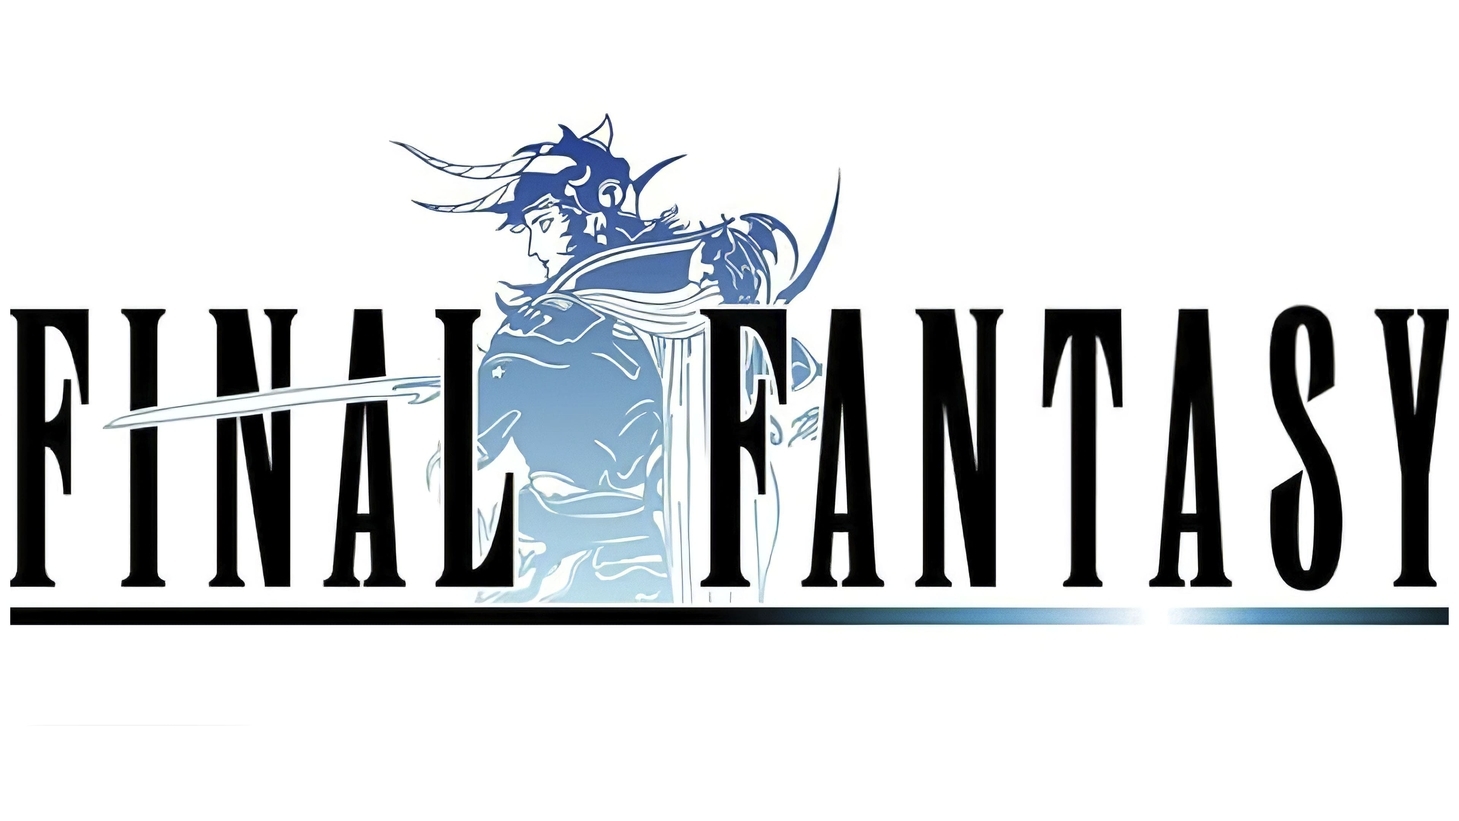 Final fantasy logo